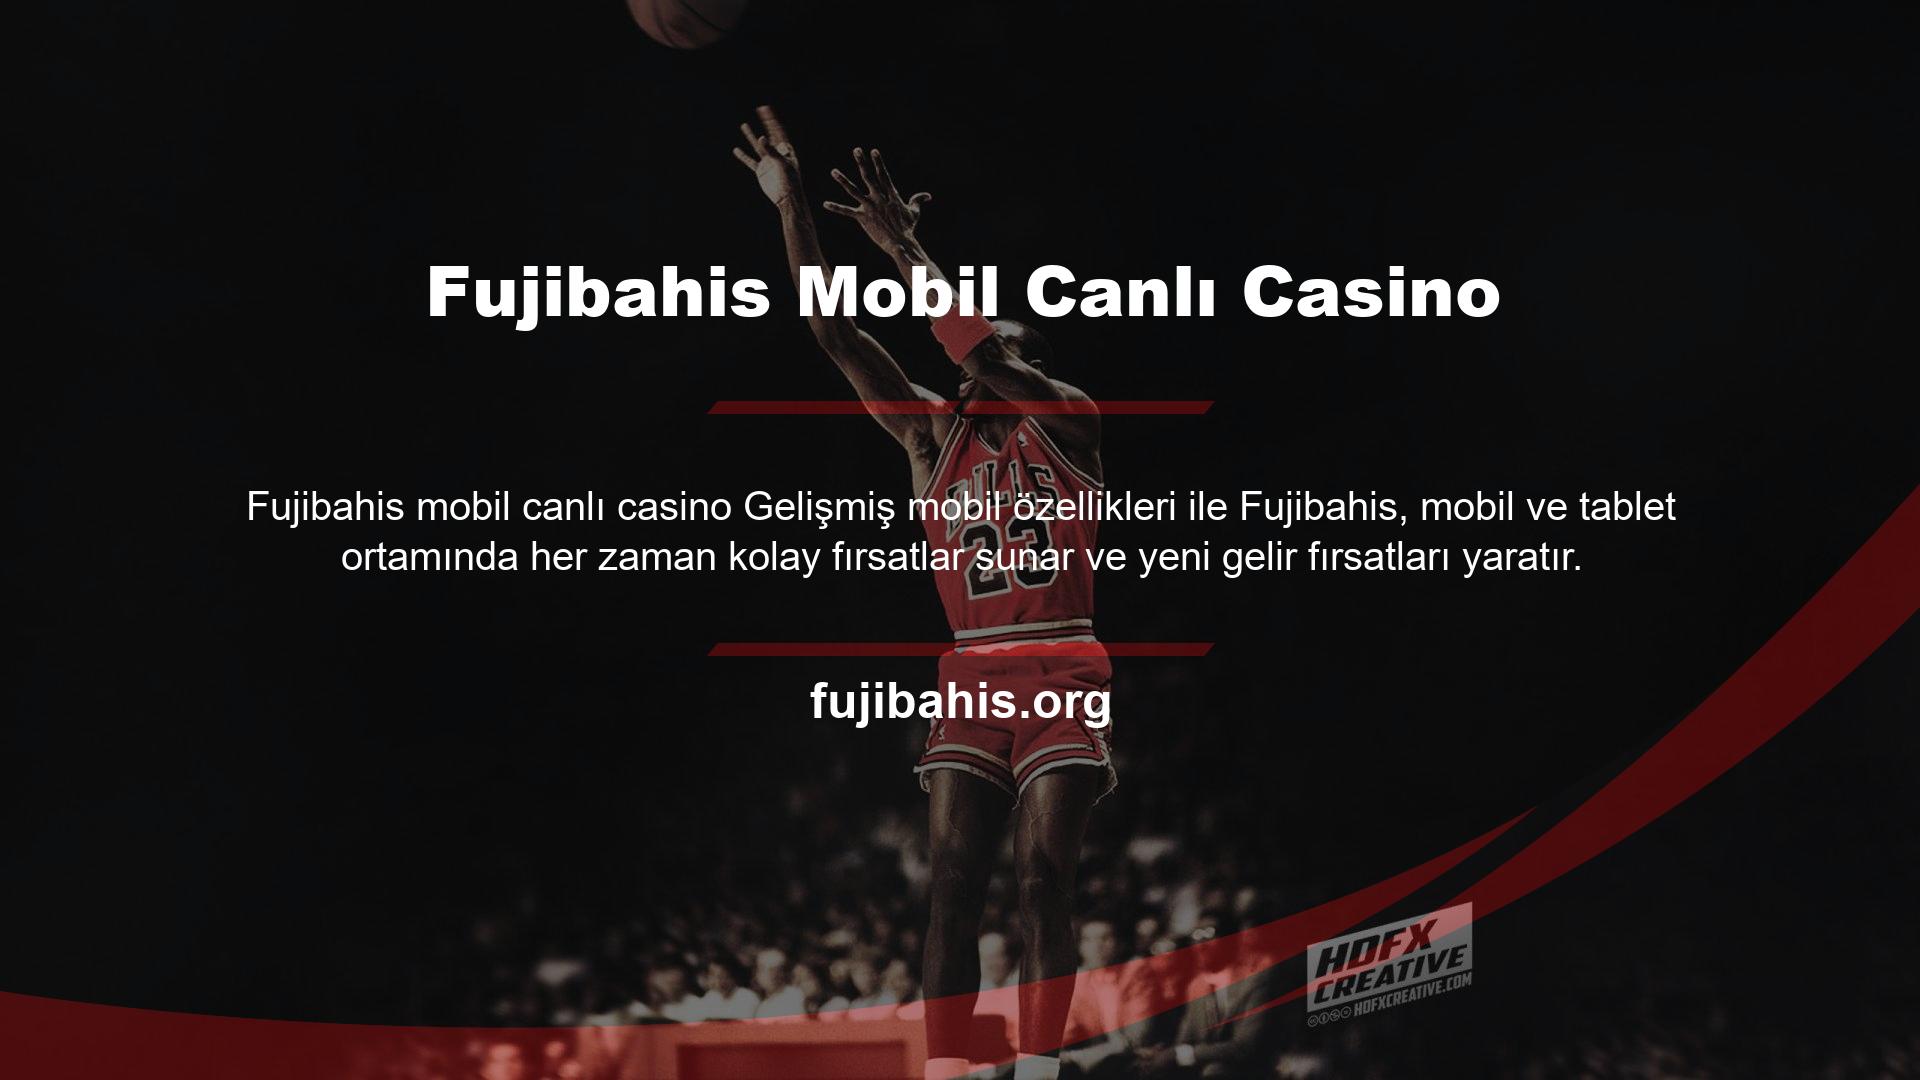 Fujibahis mobil canlı casino